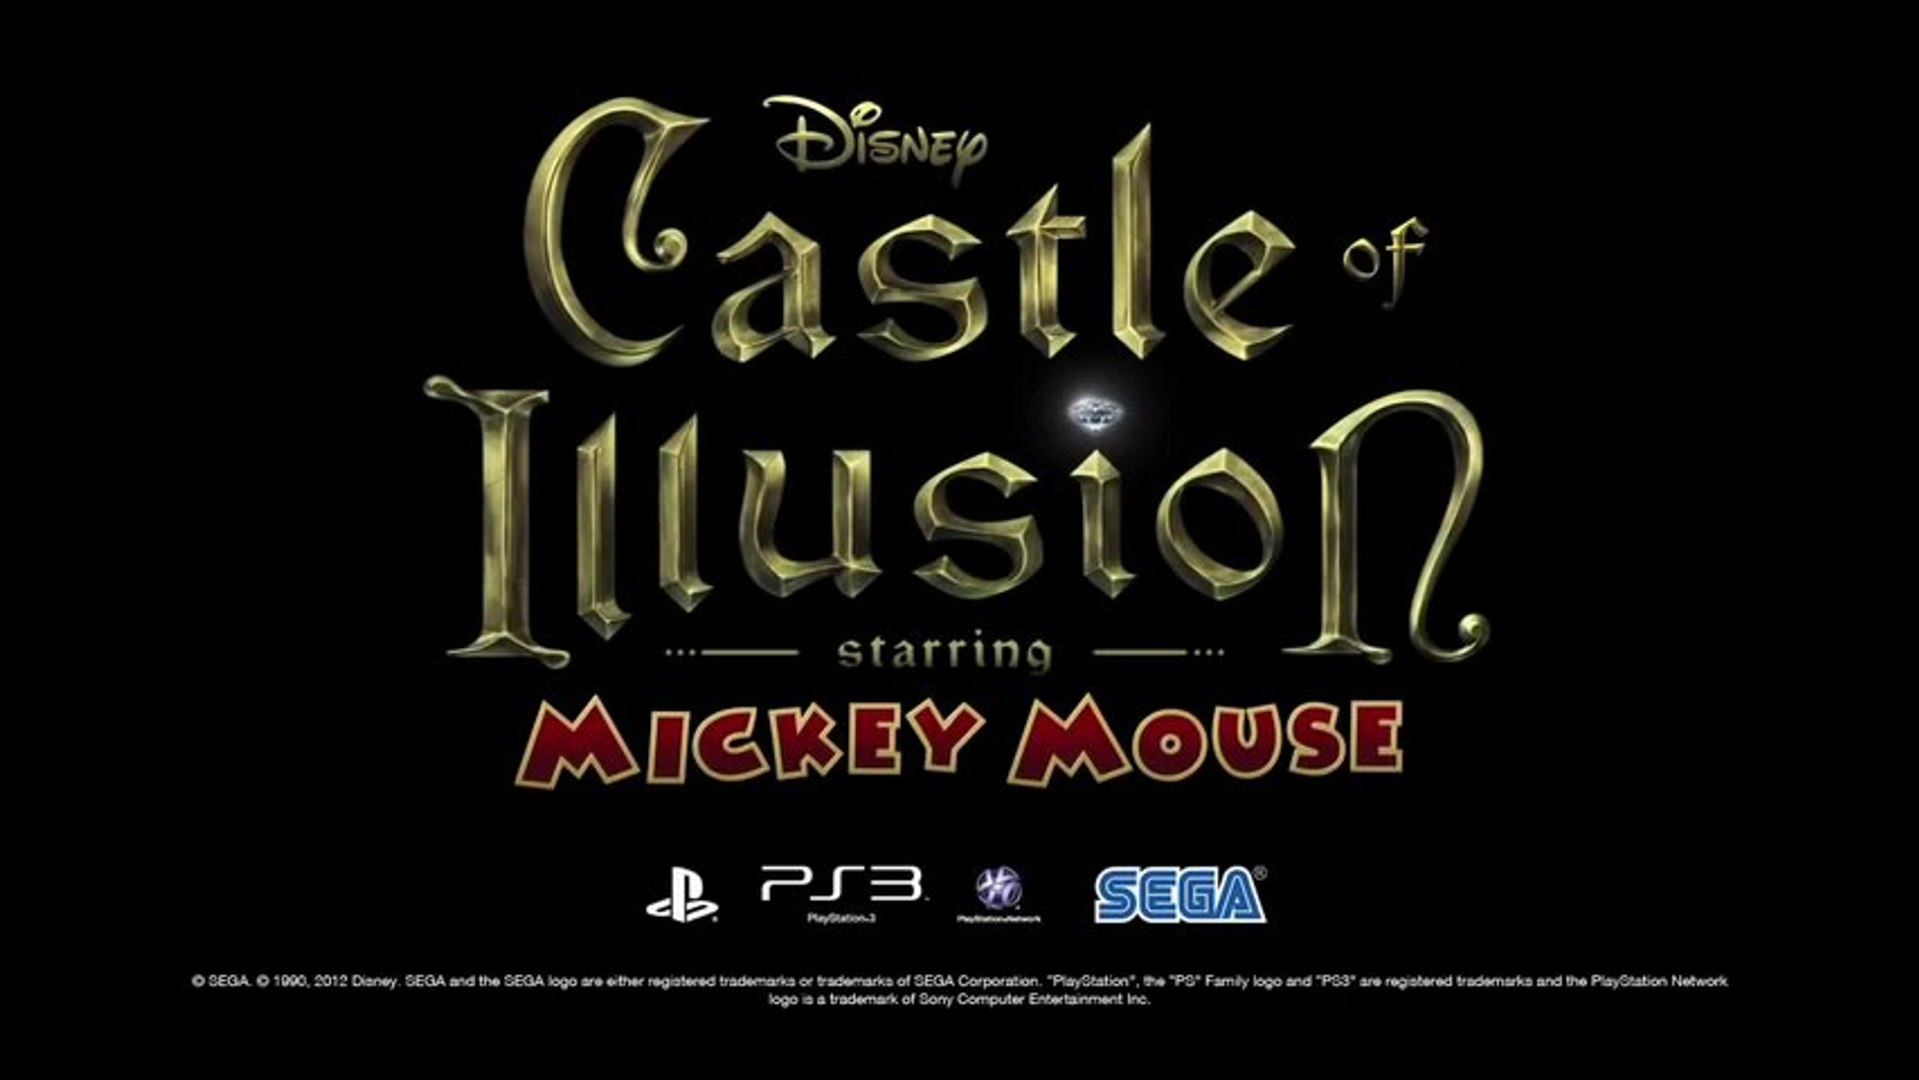 radioactividad quemado alondra Castle of Illusion starring Mickey Mouse - Trailer [HD] - Vidéo Dailymotion